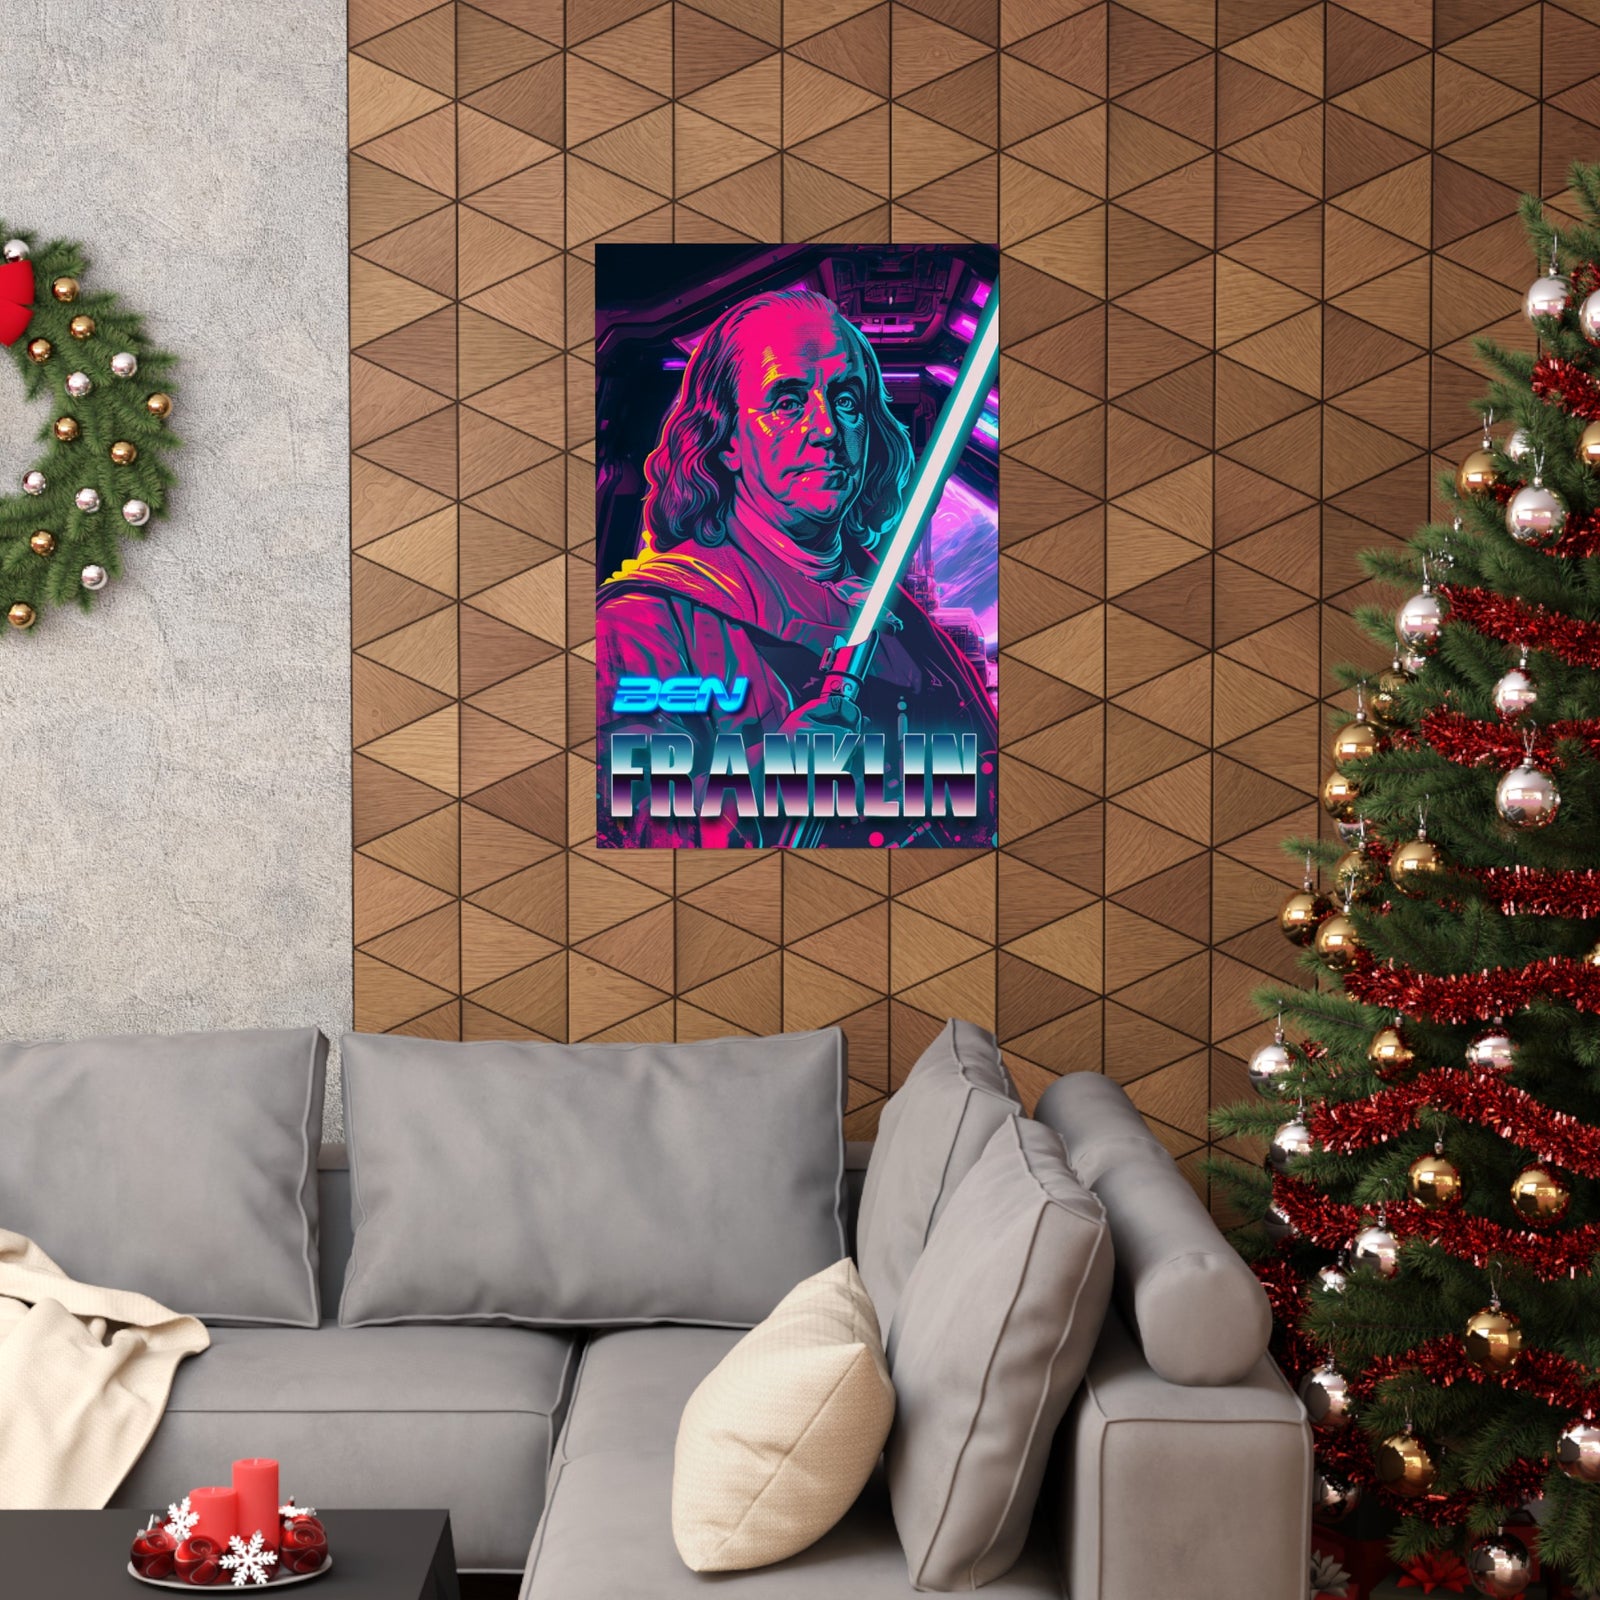 Ben Franklin - Space Wizard Poster